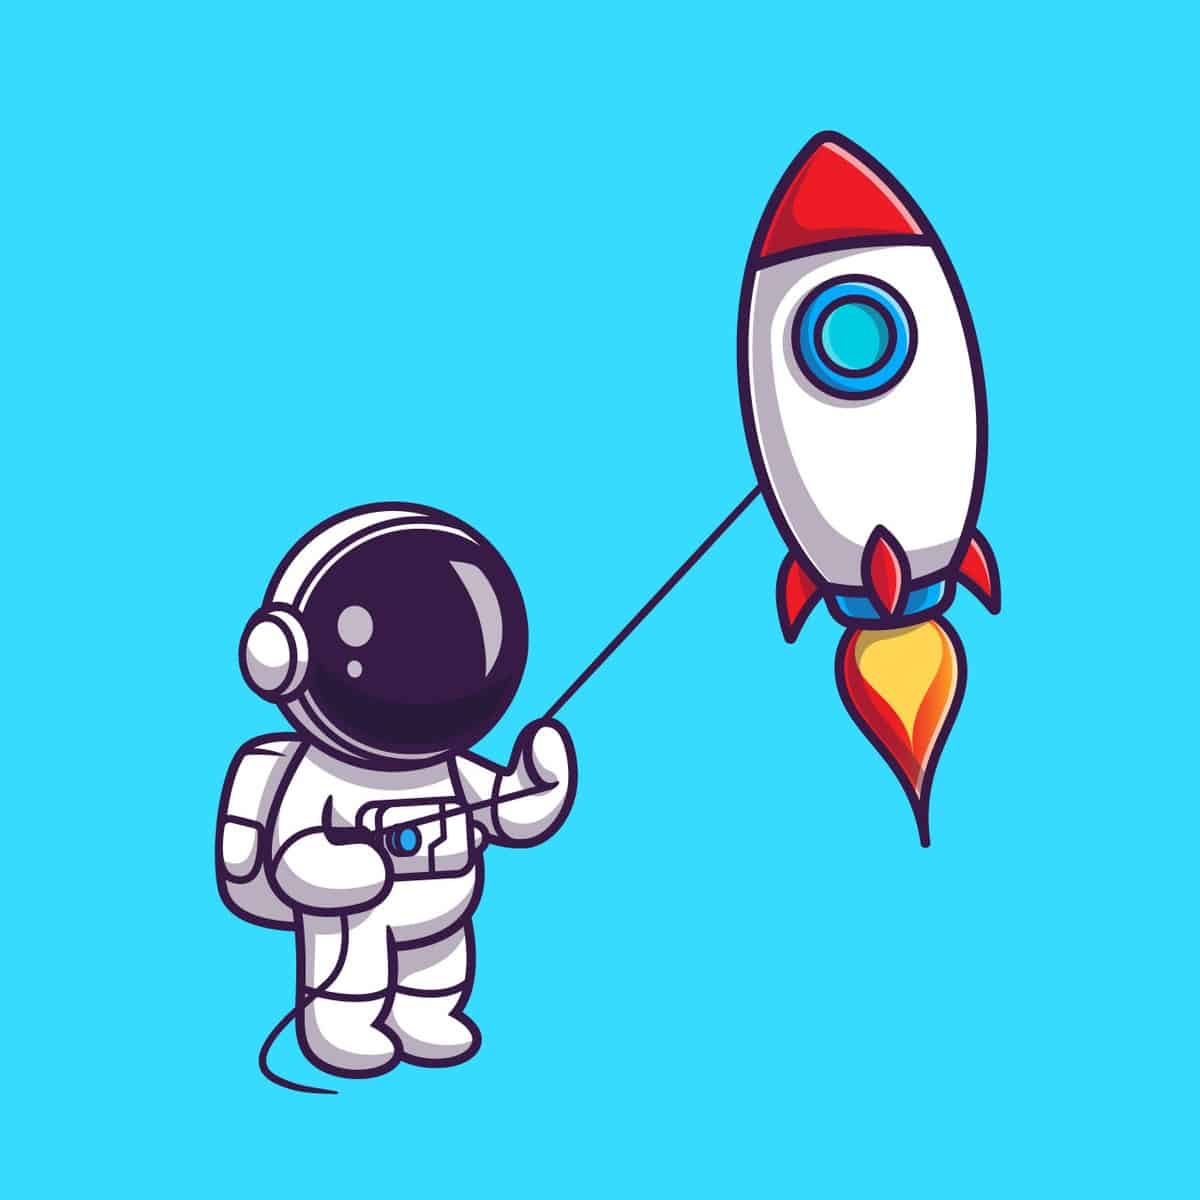 Space suit cartoon flying rocket shaped kite